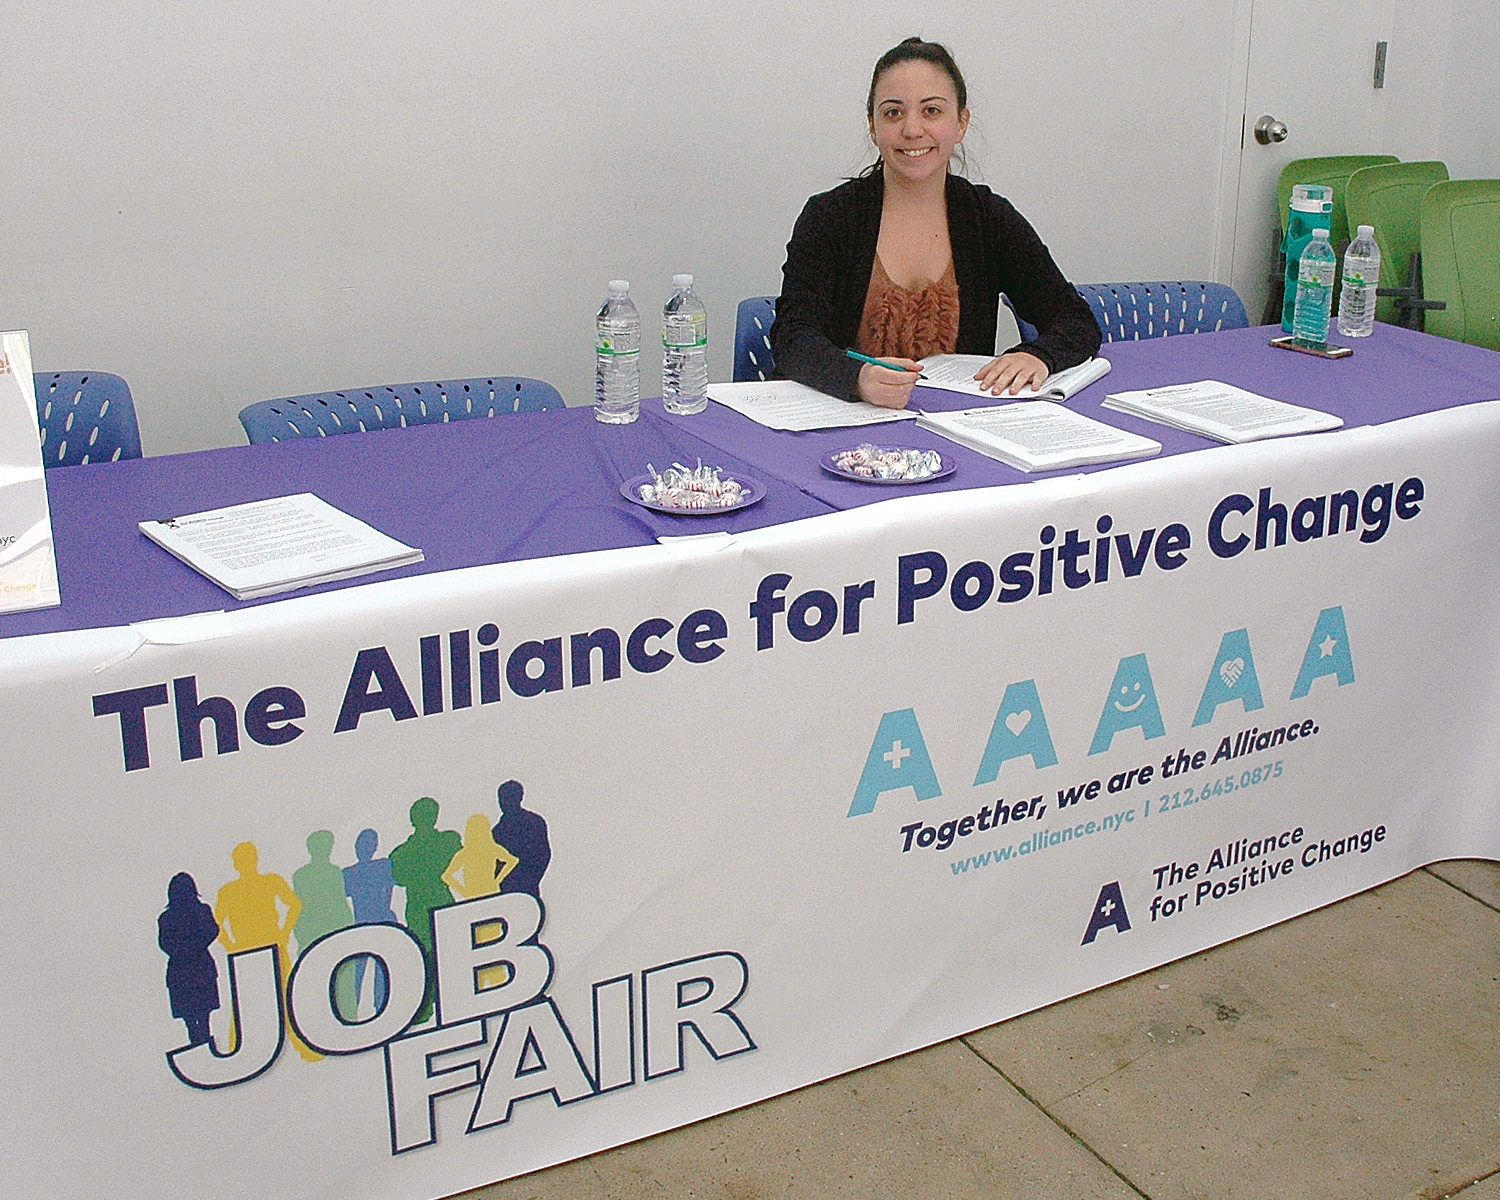 Rosie Whiteside at The Alliance table at the job fair